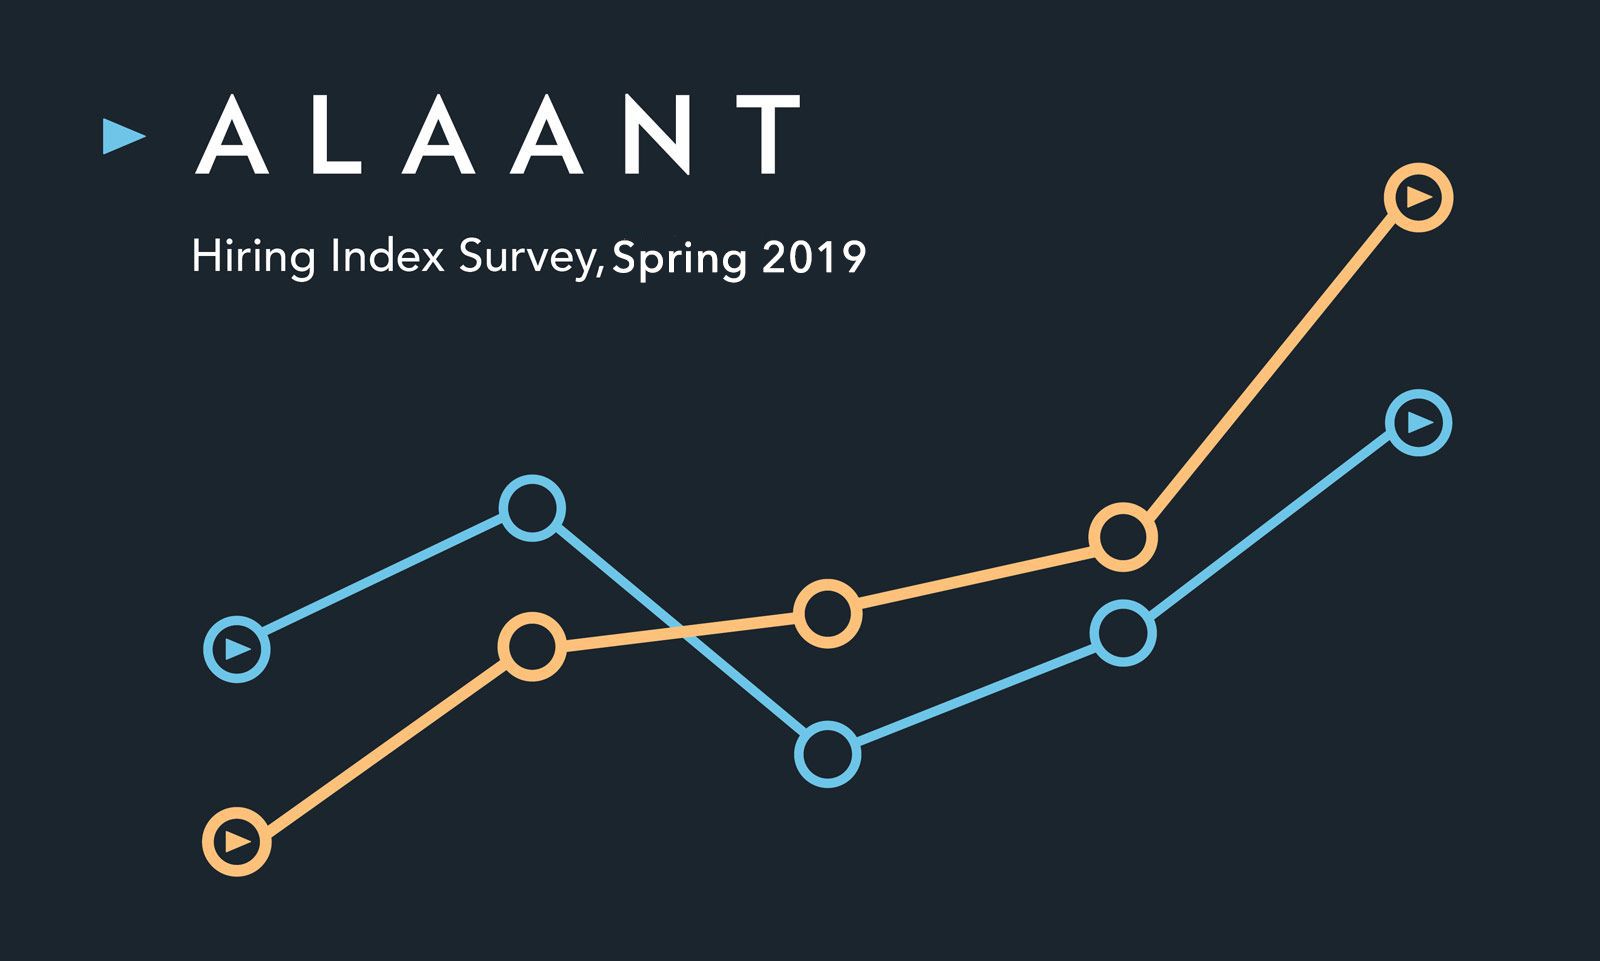 Alaant Hiring Index Survey, Spring 2019